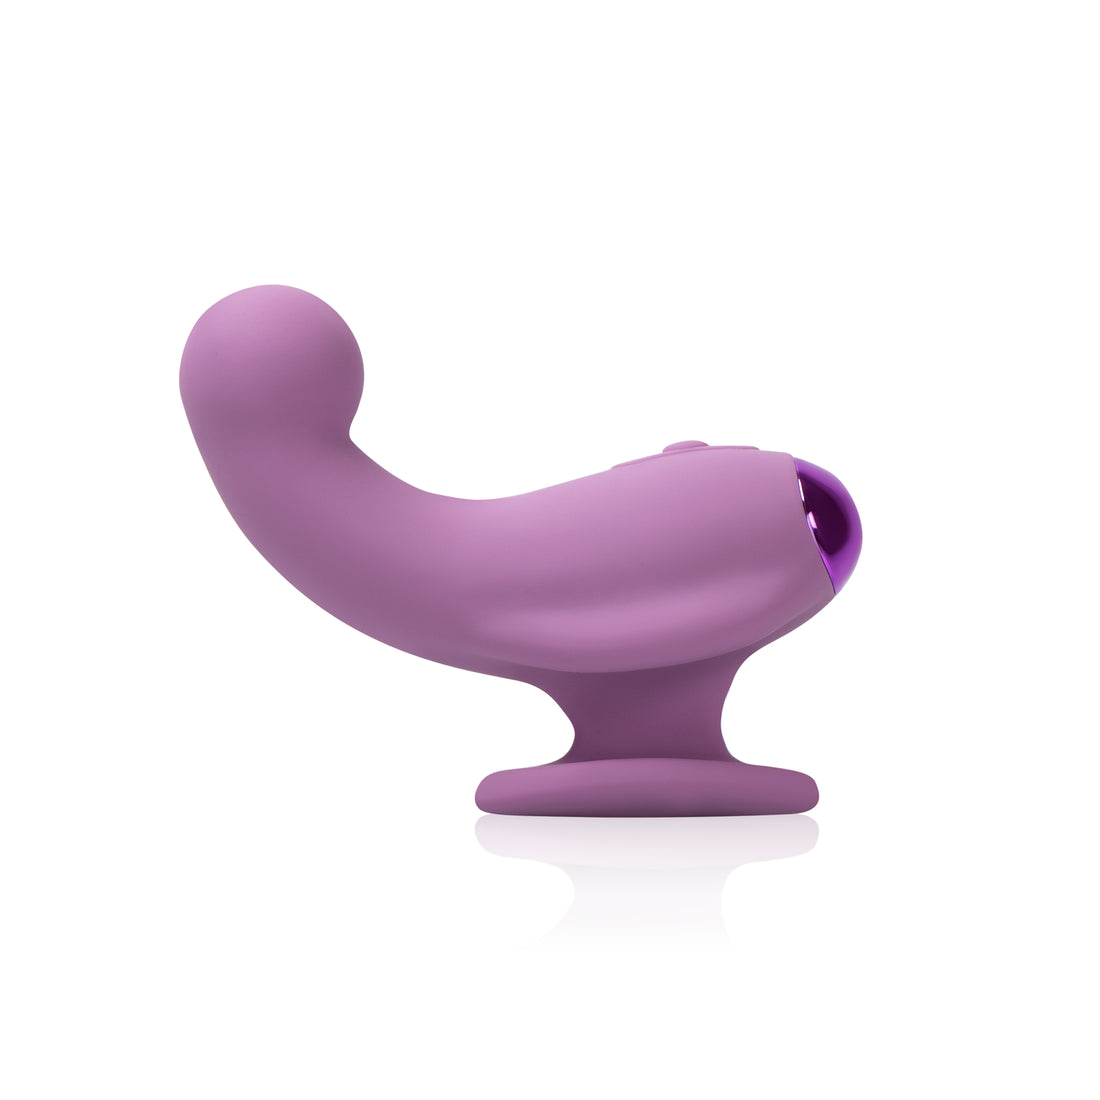 Curved Silicone Vibrator in the Purple Color